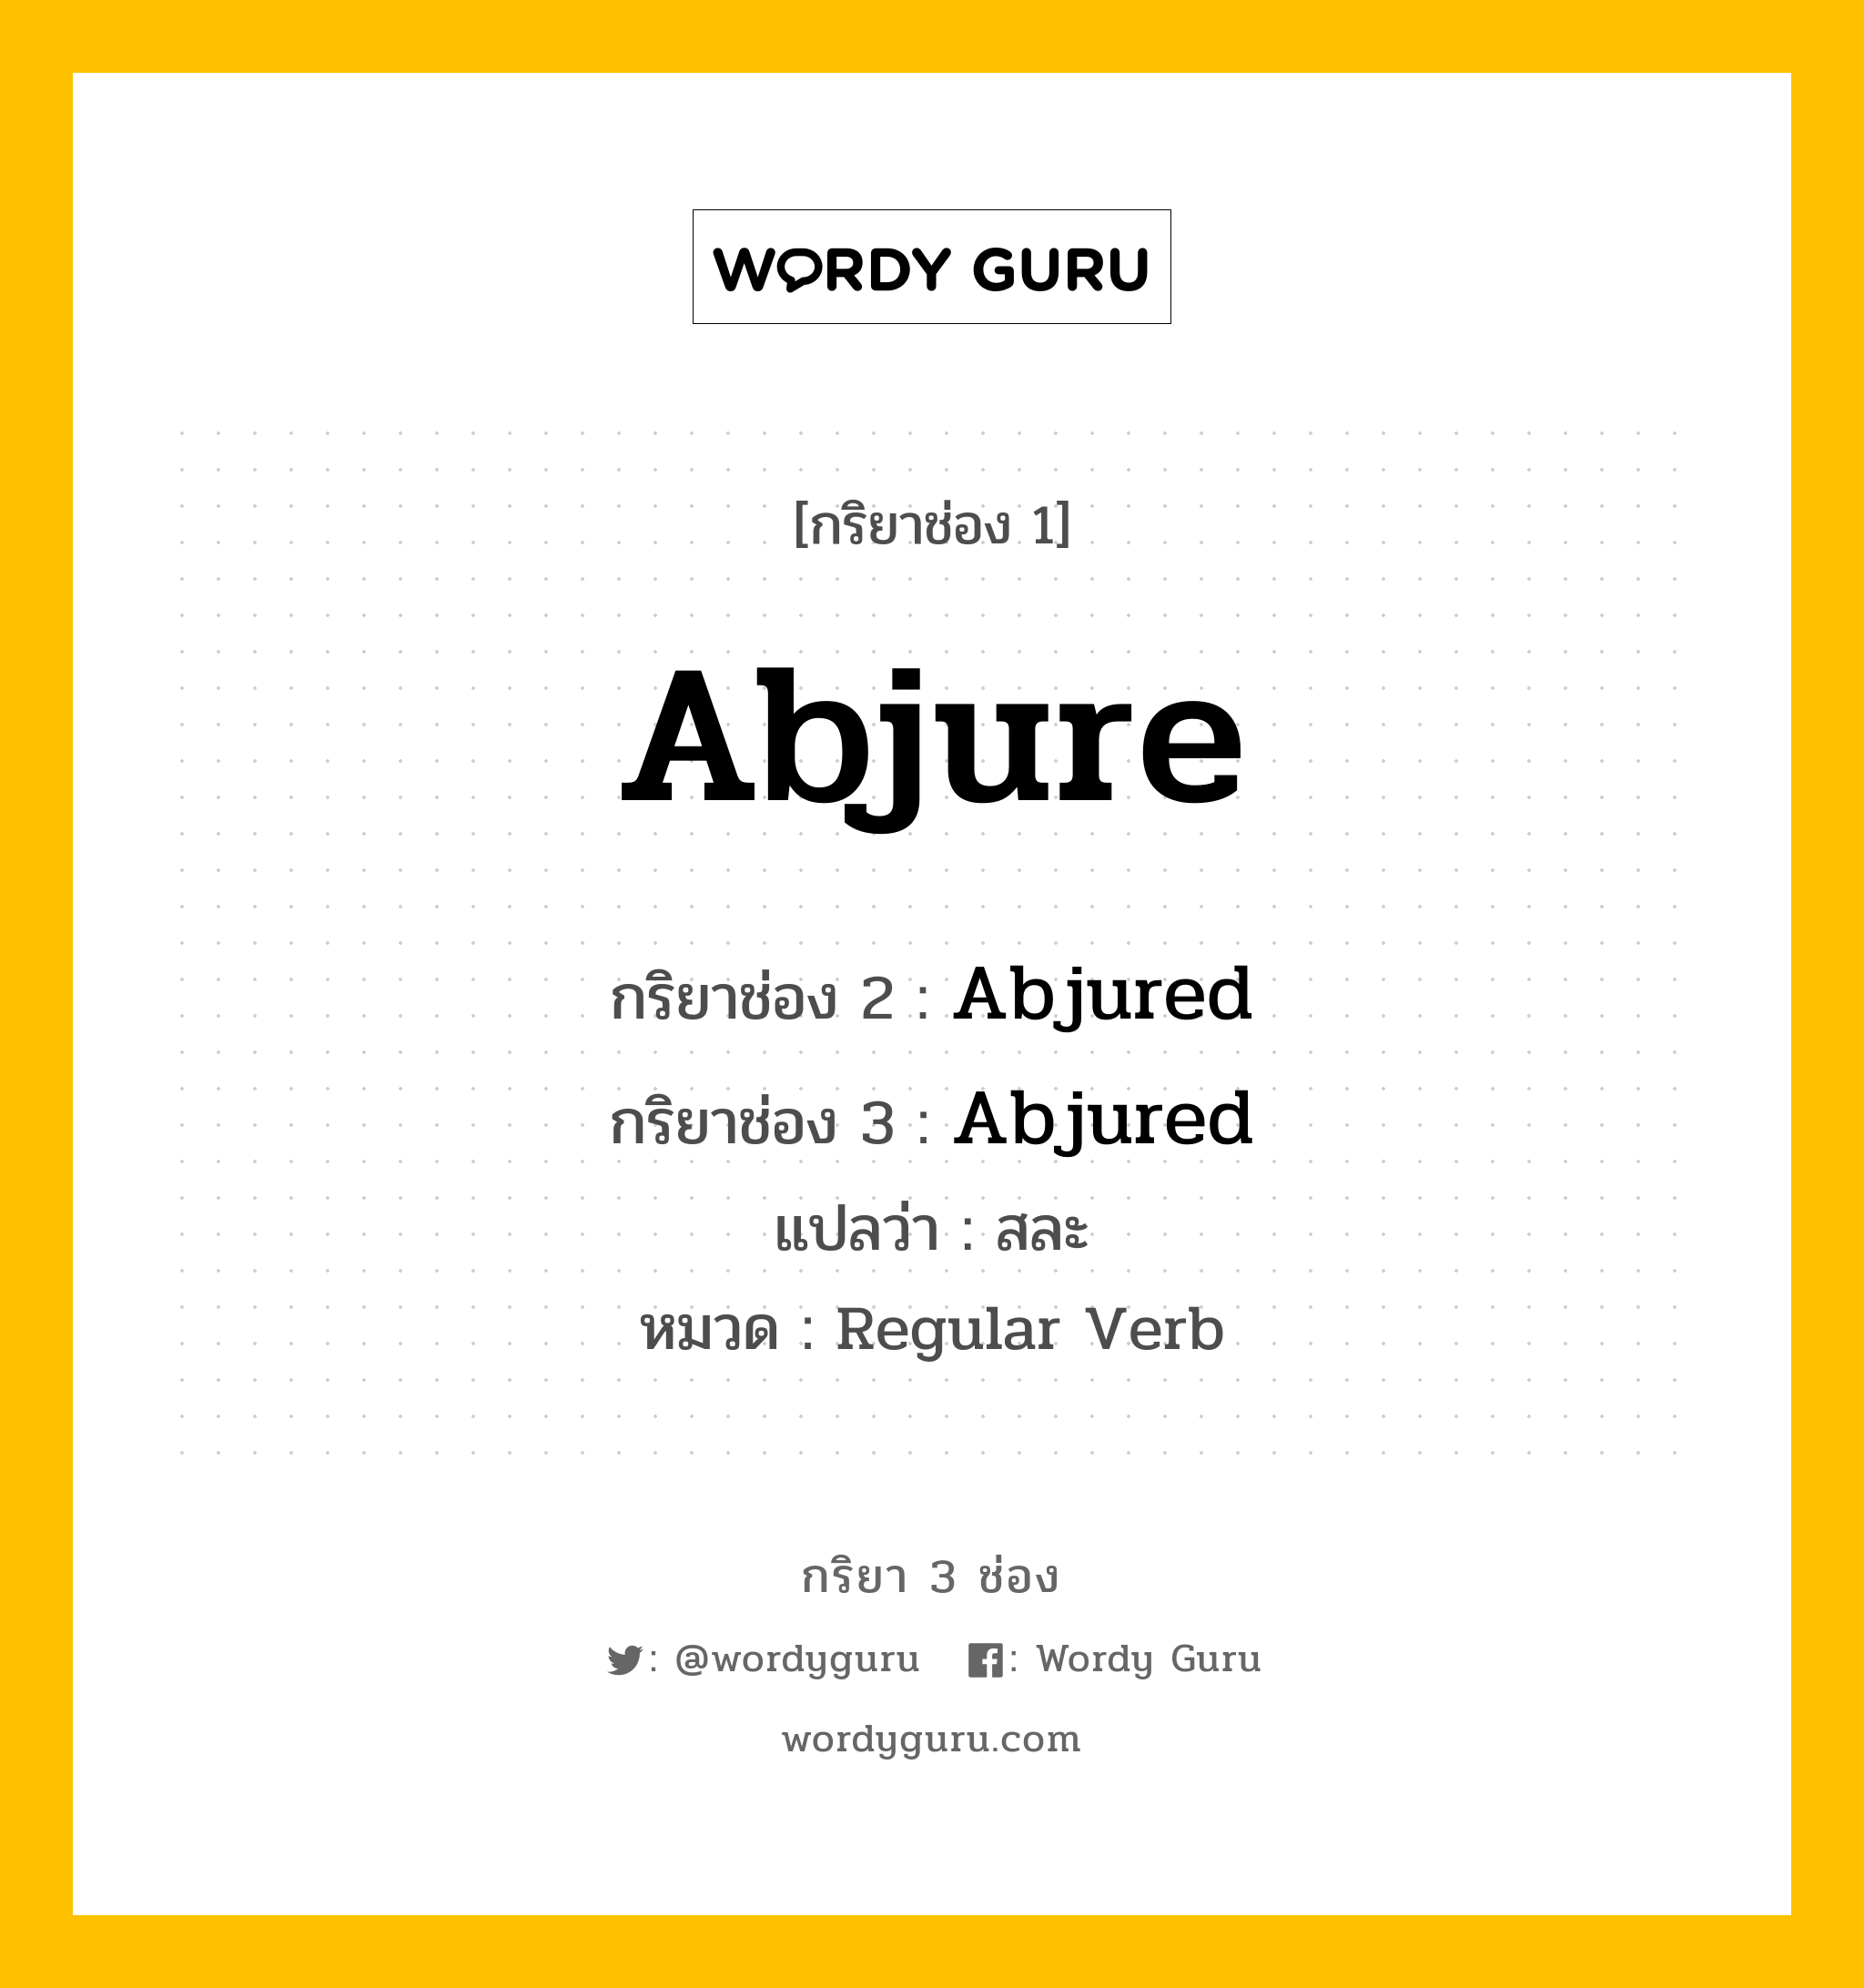 Abjure มีกริยา 3 ช่องอะไรบ้าง? คำศัพท์ในกลุ่มประเภท Regular Verb, กริยาช่อง 1 Abjure กริยาช่อง 2 Abjured กริยาช่อง 3 Abjured แปลว่า สละ หมวด Regular Verb หมวด Regular Verb